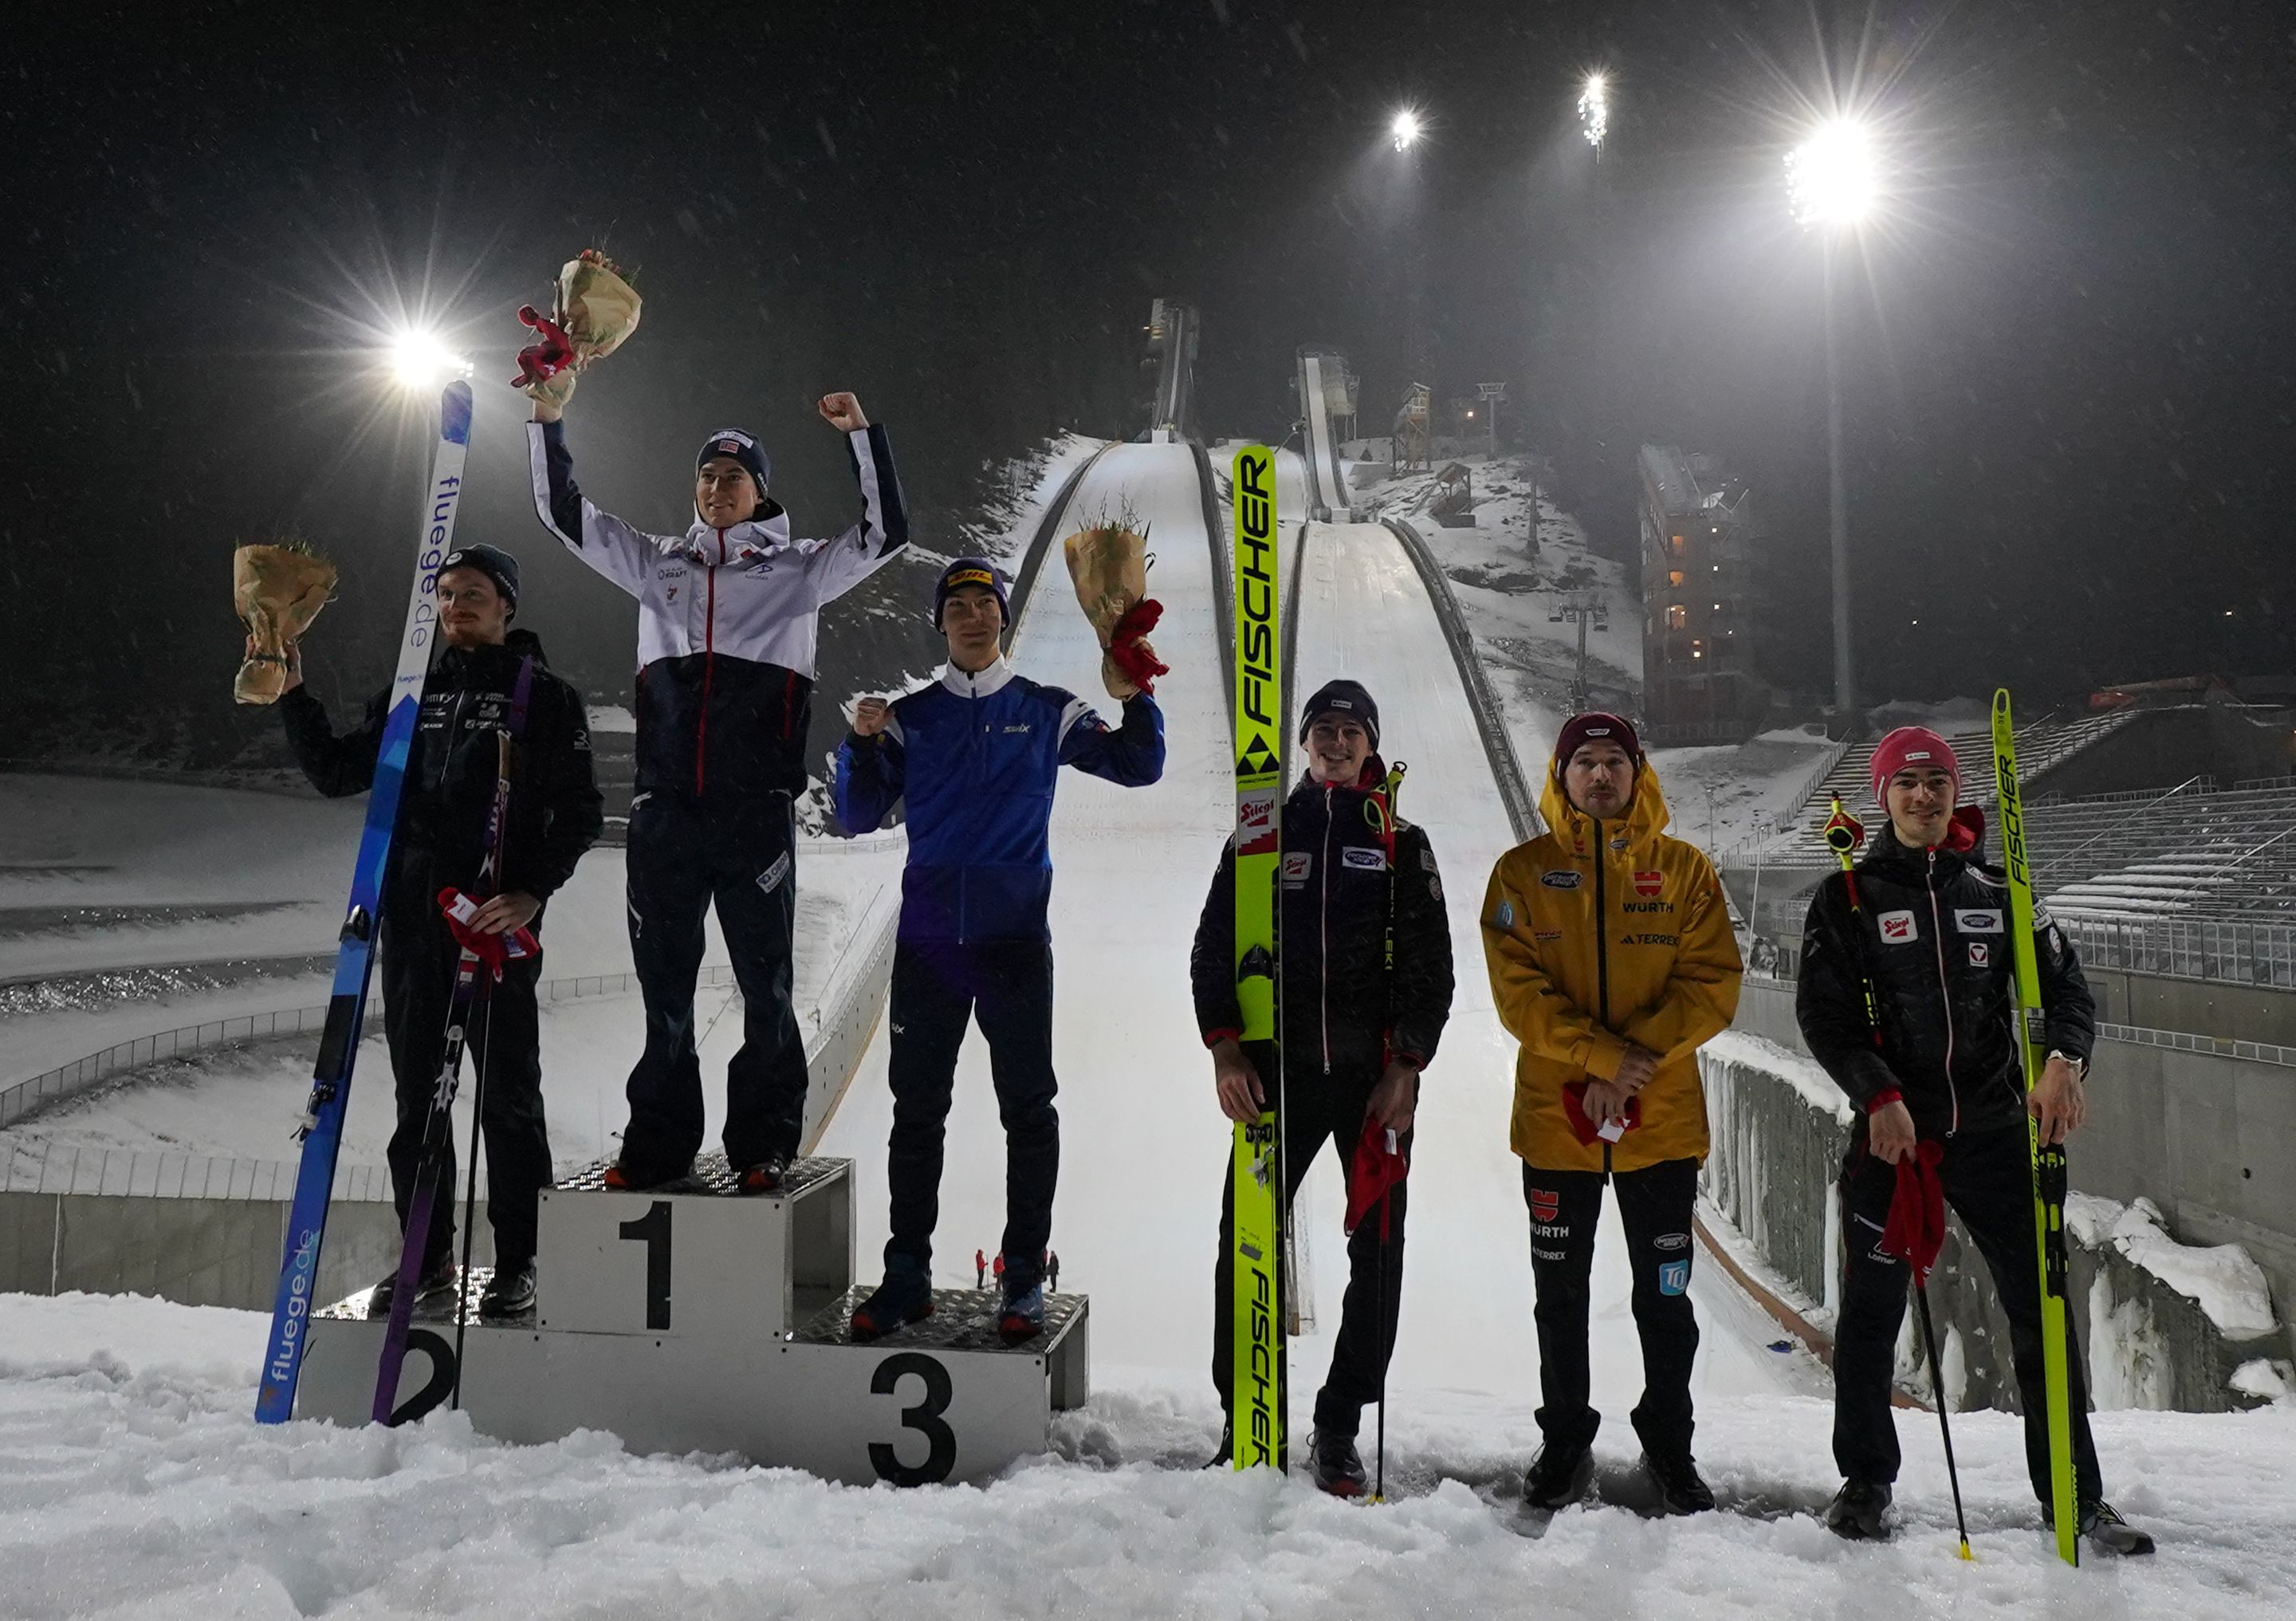 Marius Solvik took the victory in the Super Sprint on Friday (c) Norges Skiforbundet